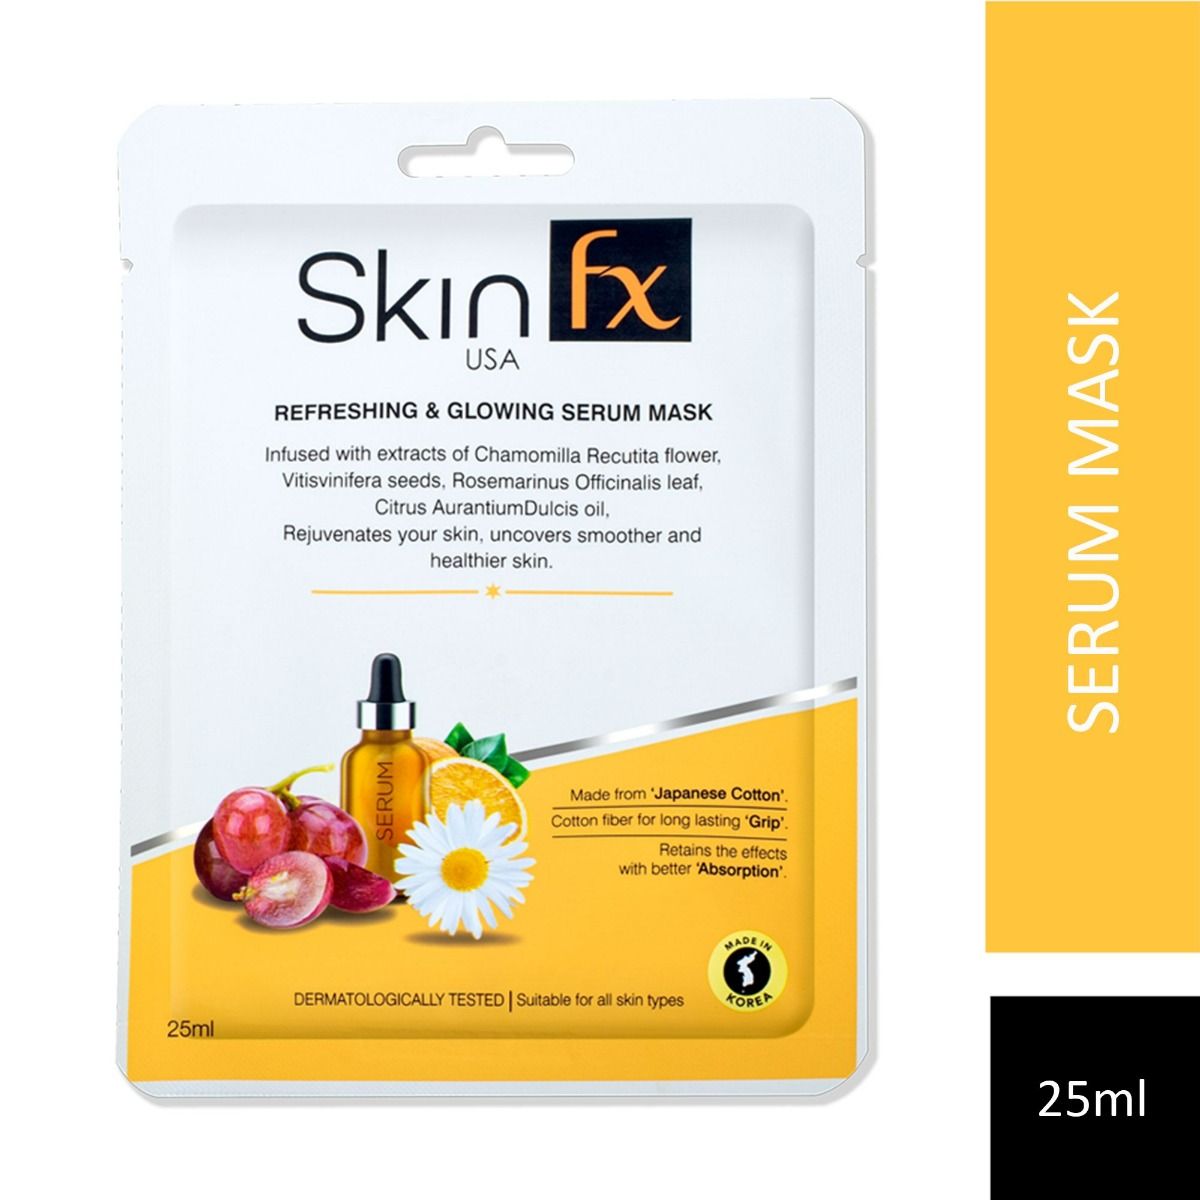 Skin Fx Refreshing & Glowing Serum Mask, 25 ml, Pack of 1 